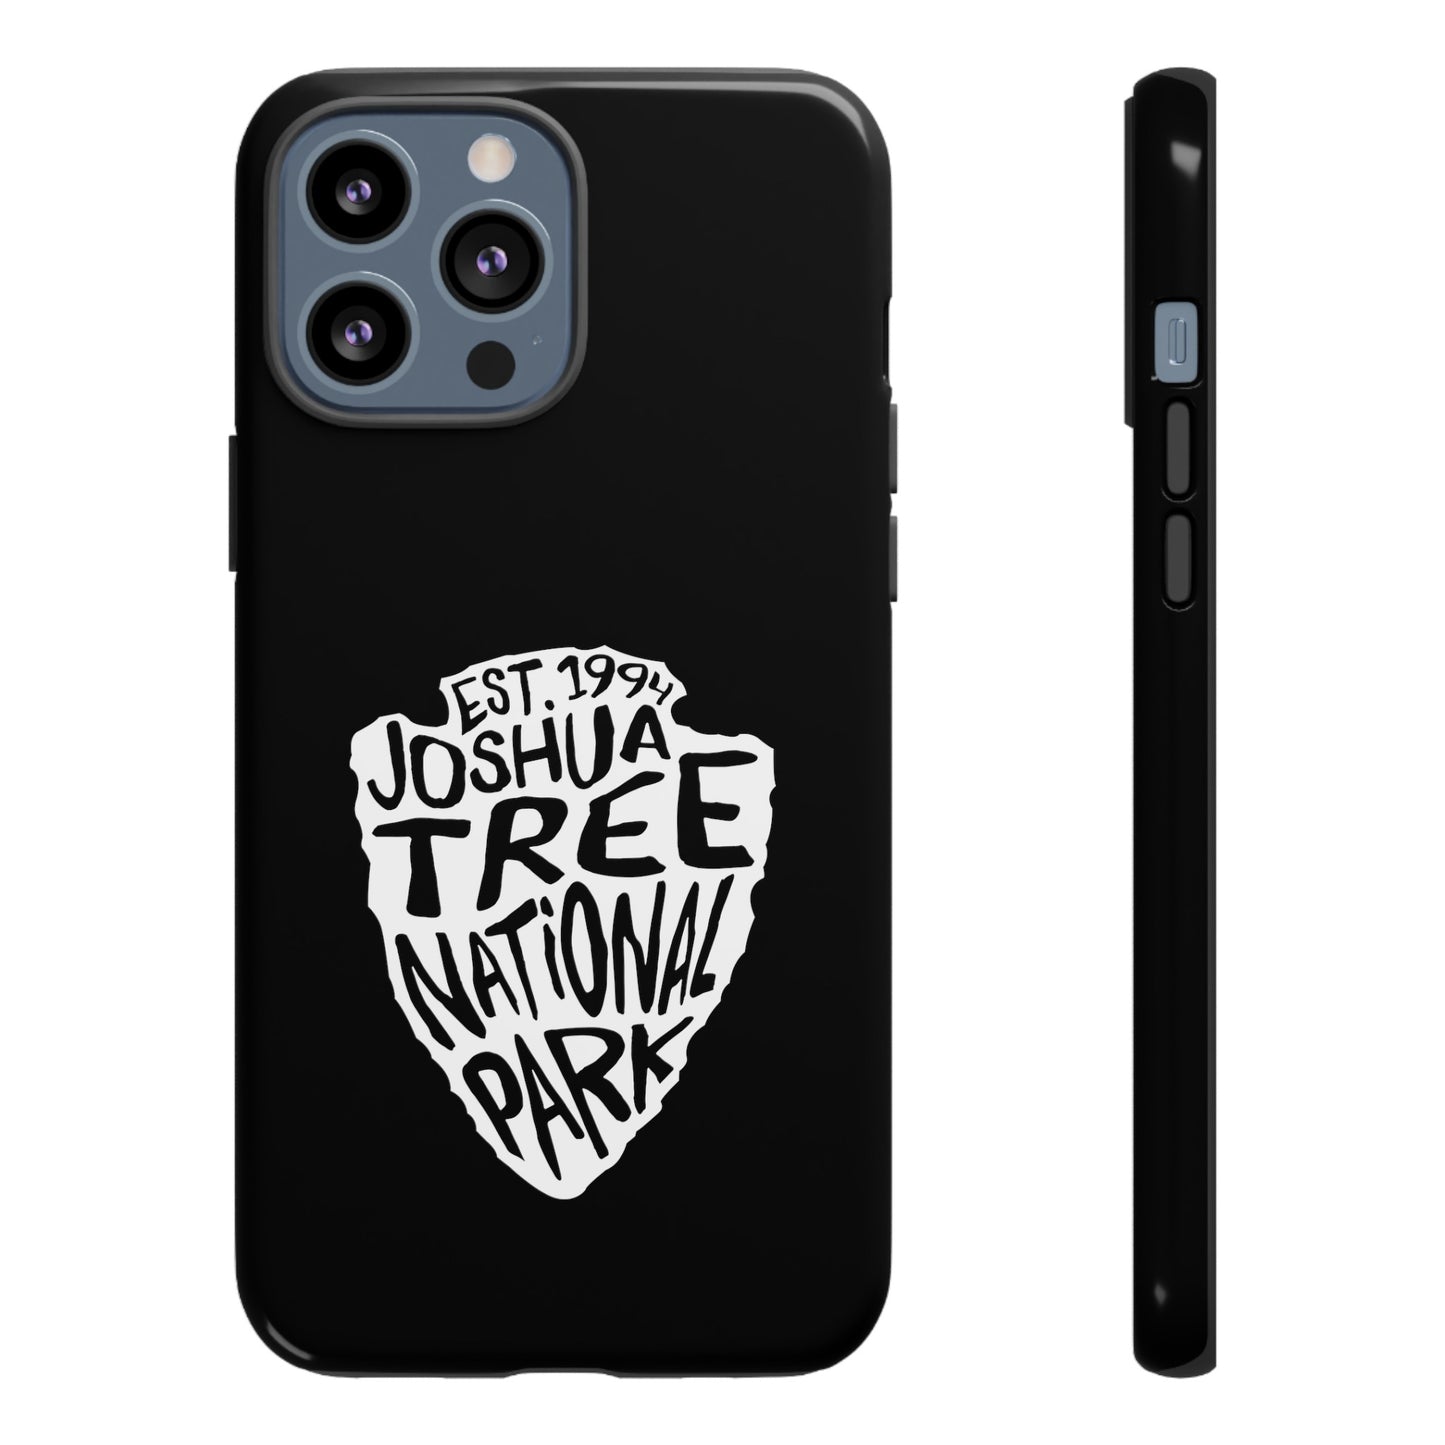 Joshua Tree National Park Phone Case - Arrowhead Design